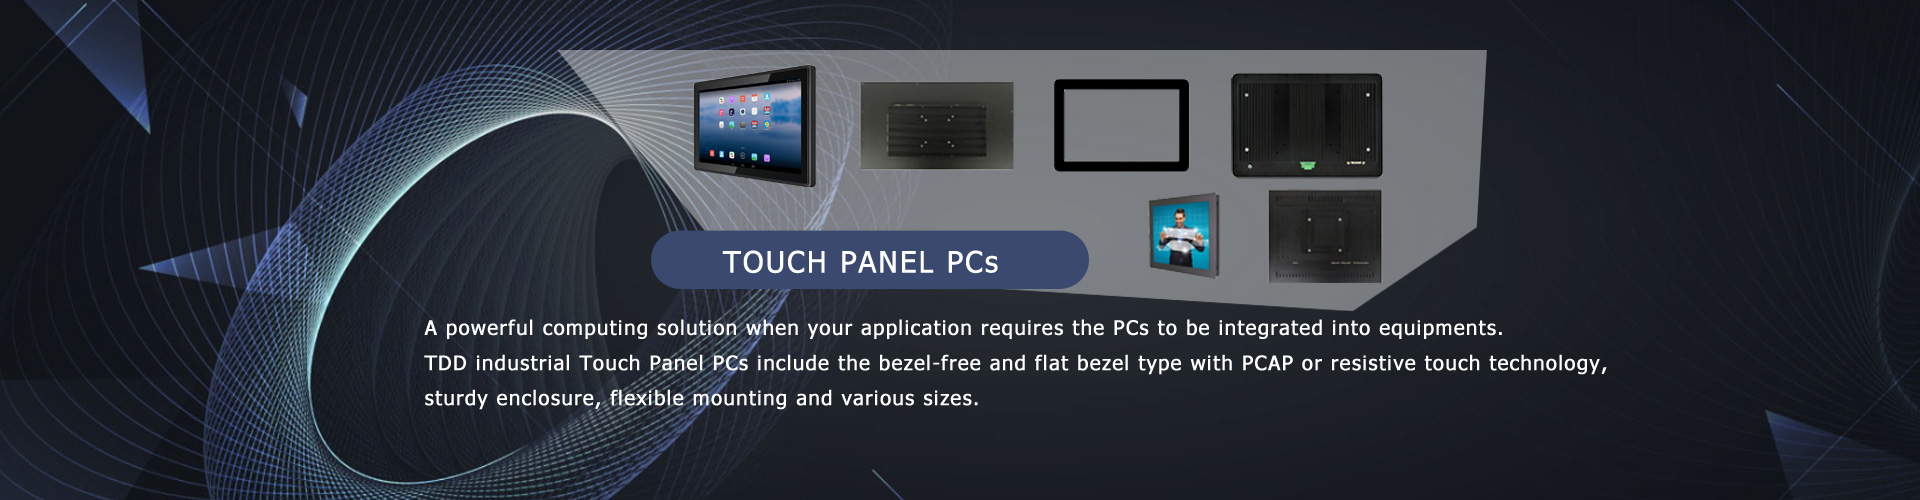 Touch Panel PCs